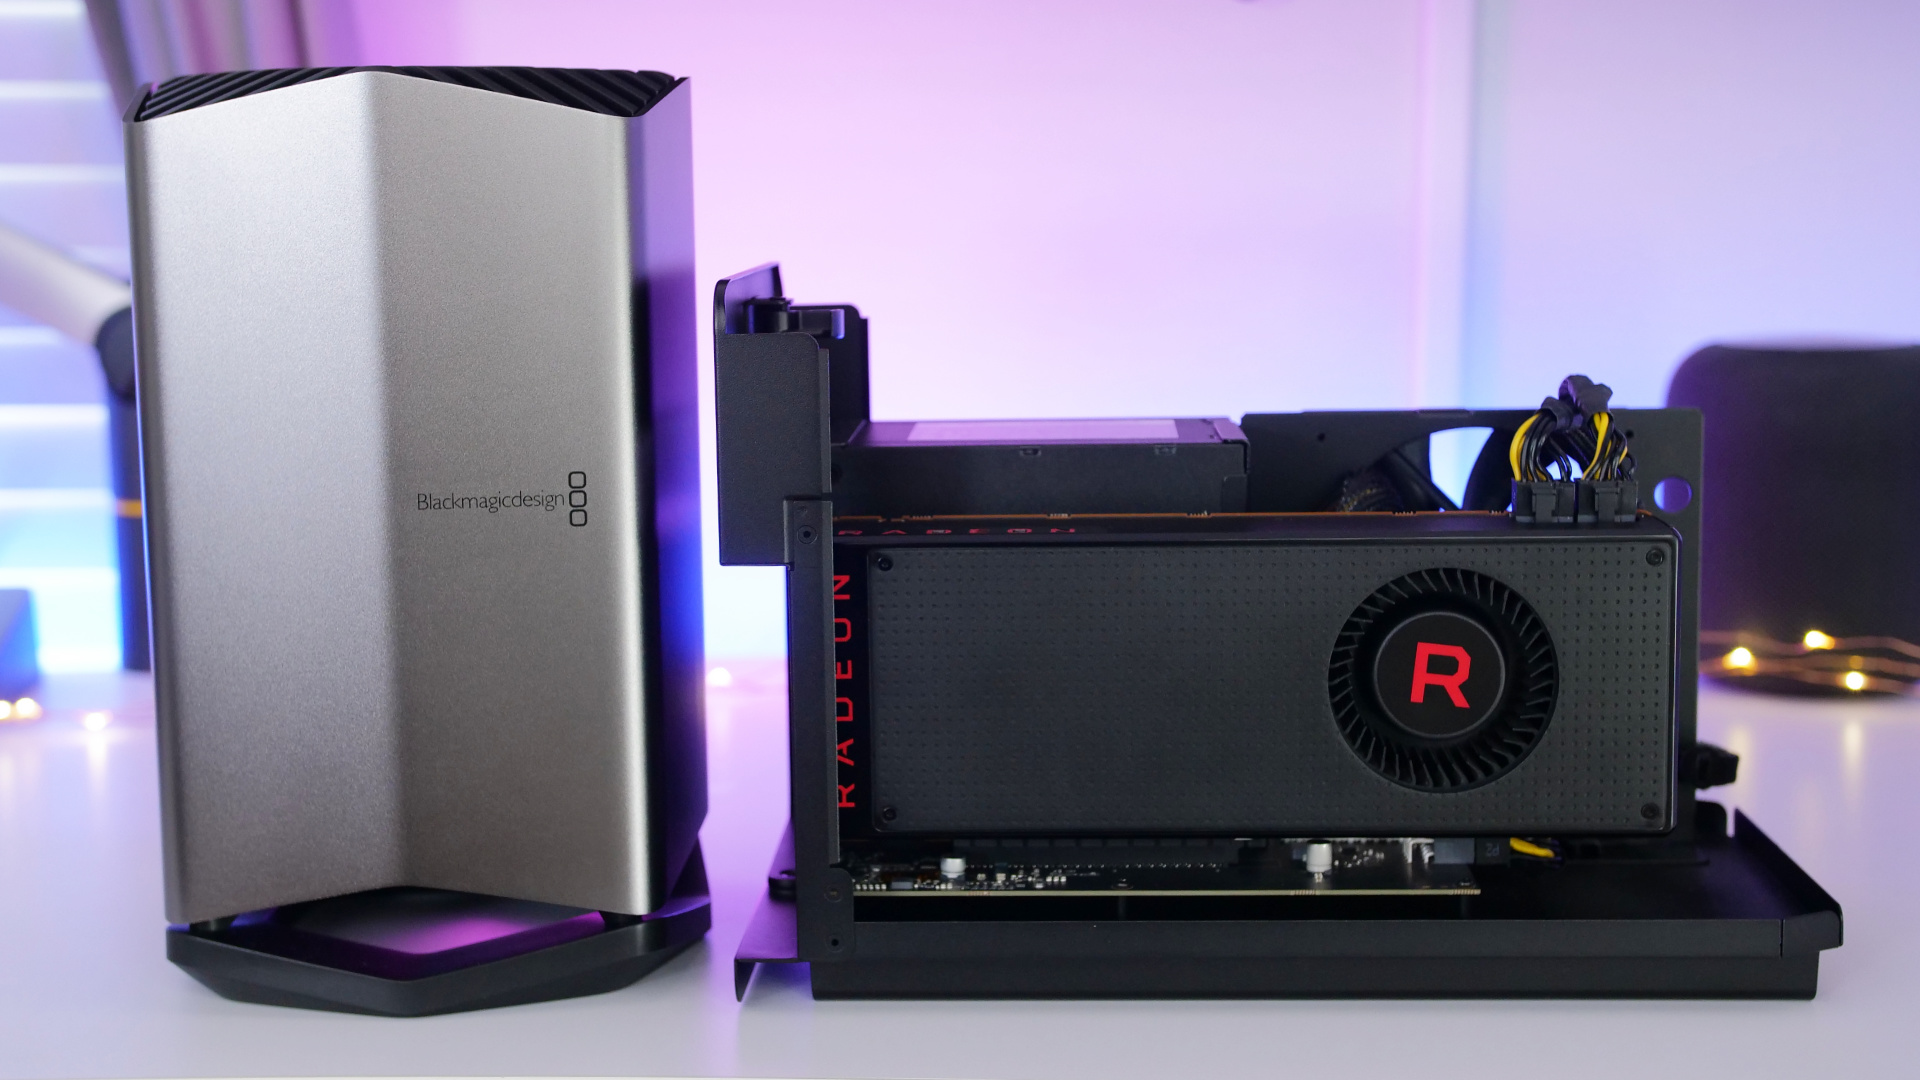 Compared: Razer Core X with RX Vega 64 vs Blackmagic eGPU [Video